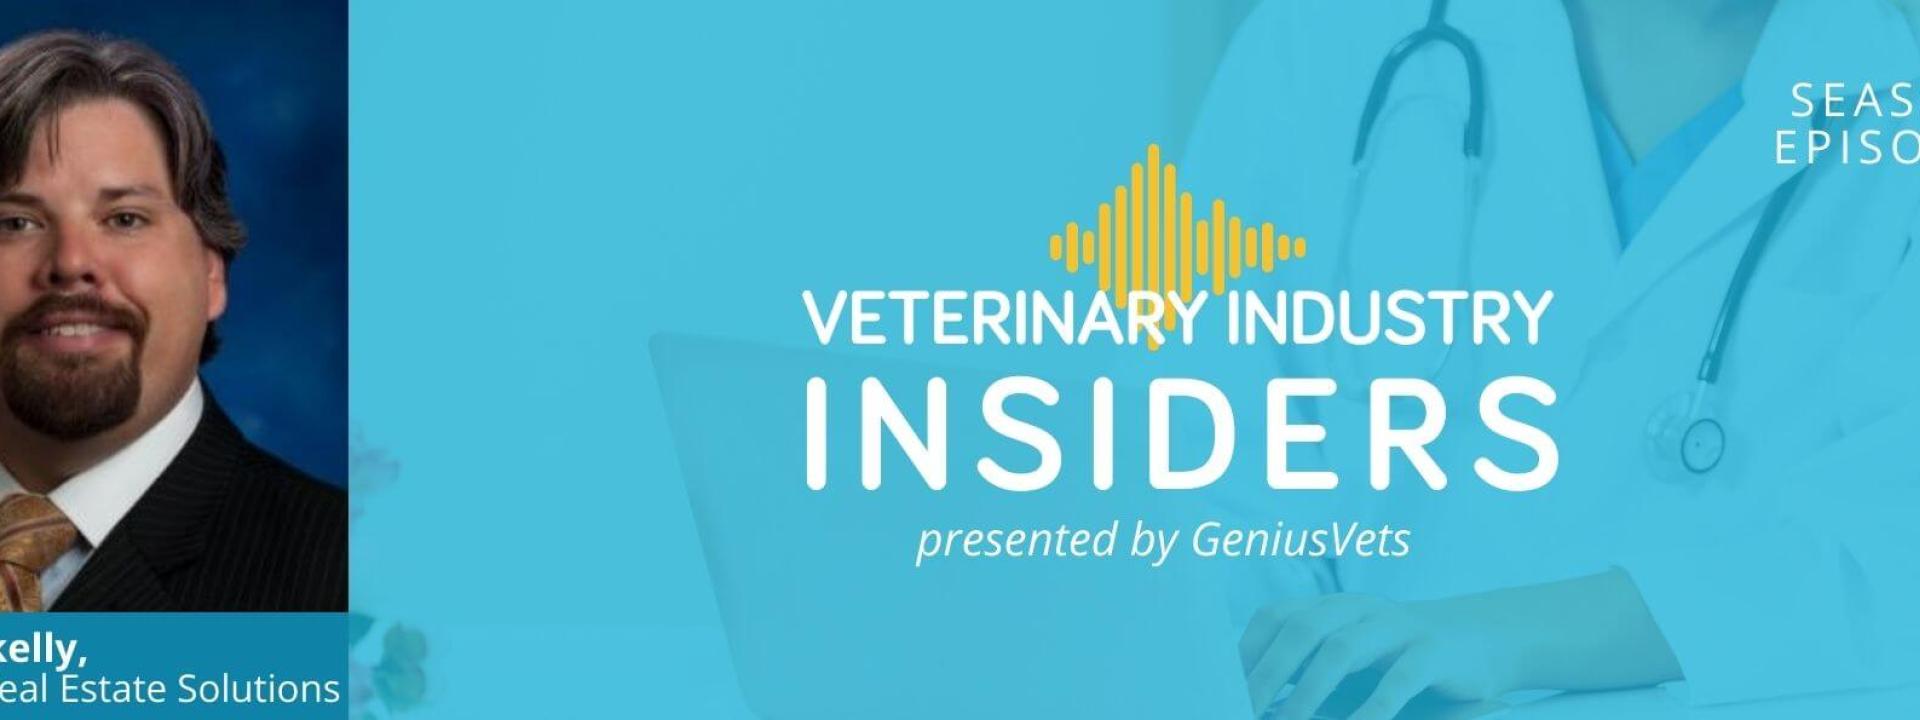 Veterinary Industry Insiders With GeniusVets and Peter Kilkelly